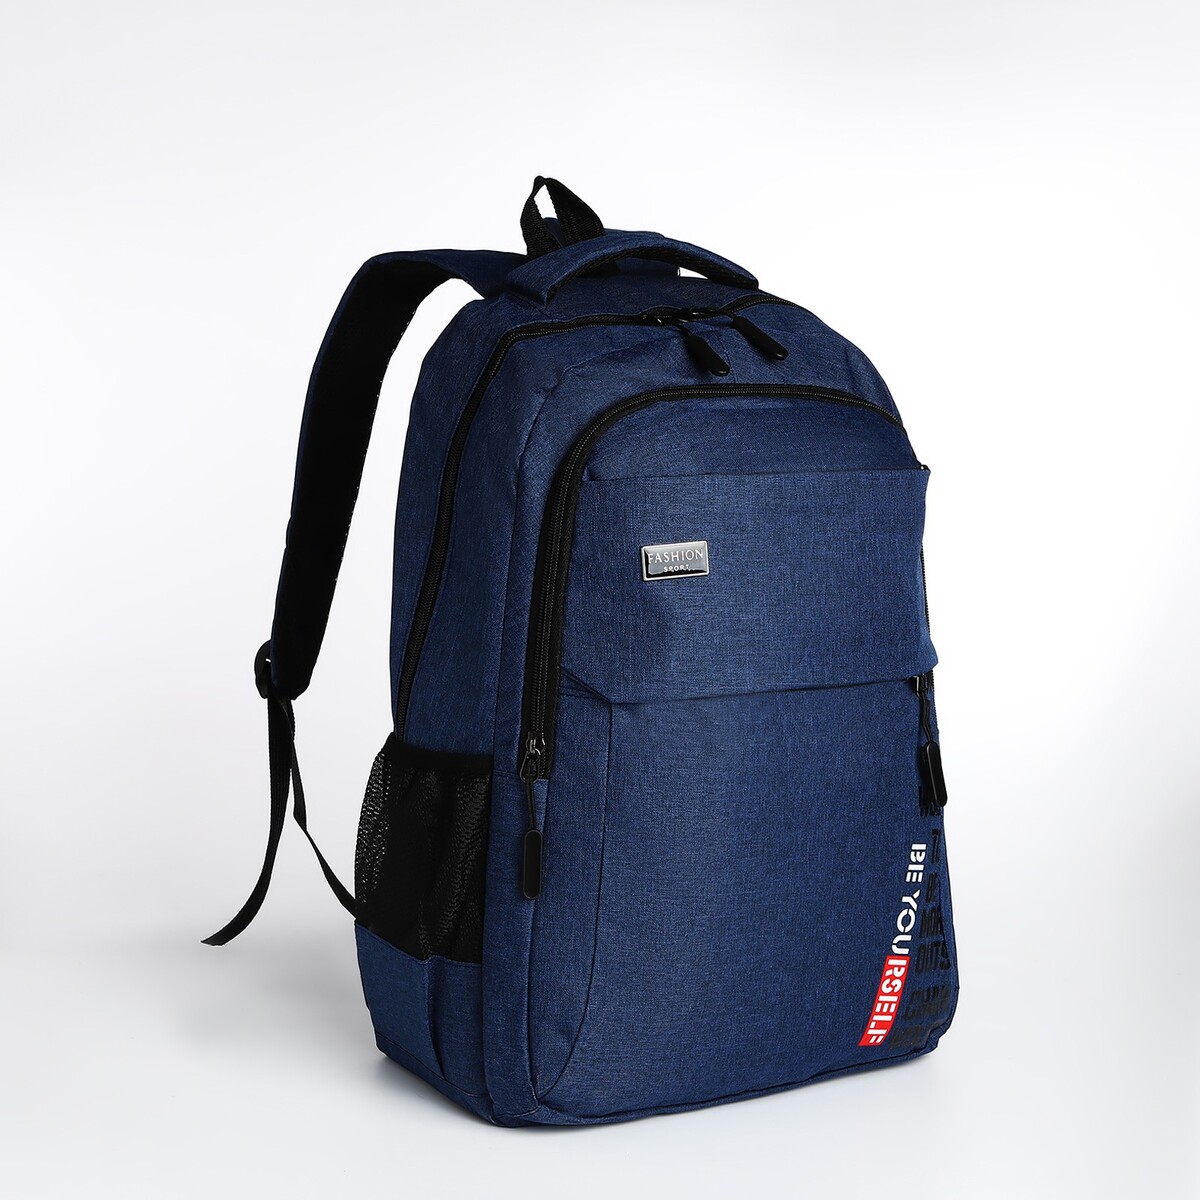 Рюкзак молодежный на молнии, 4 кармана, цвет синий